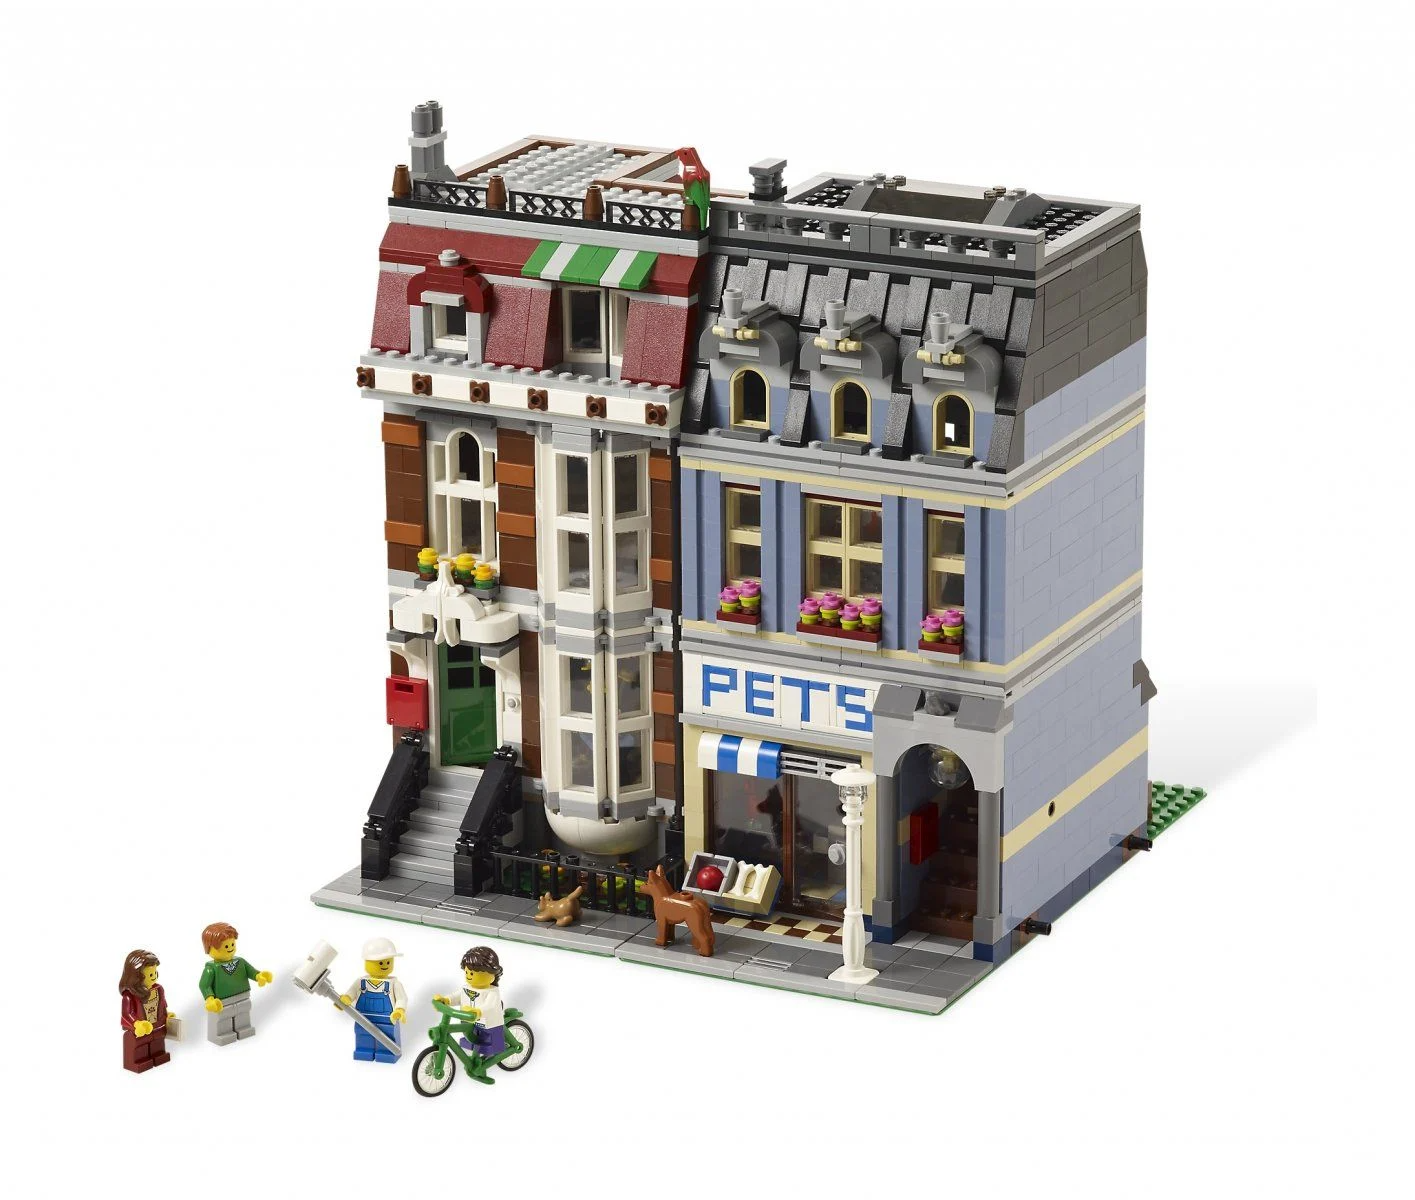 LEGO Pet Shop Modular Buildings